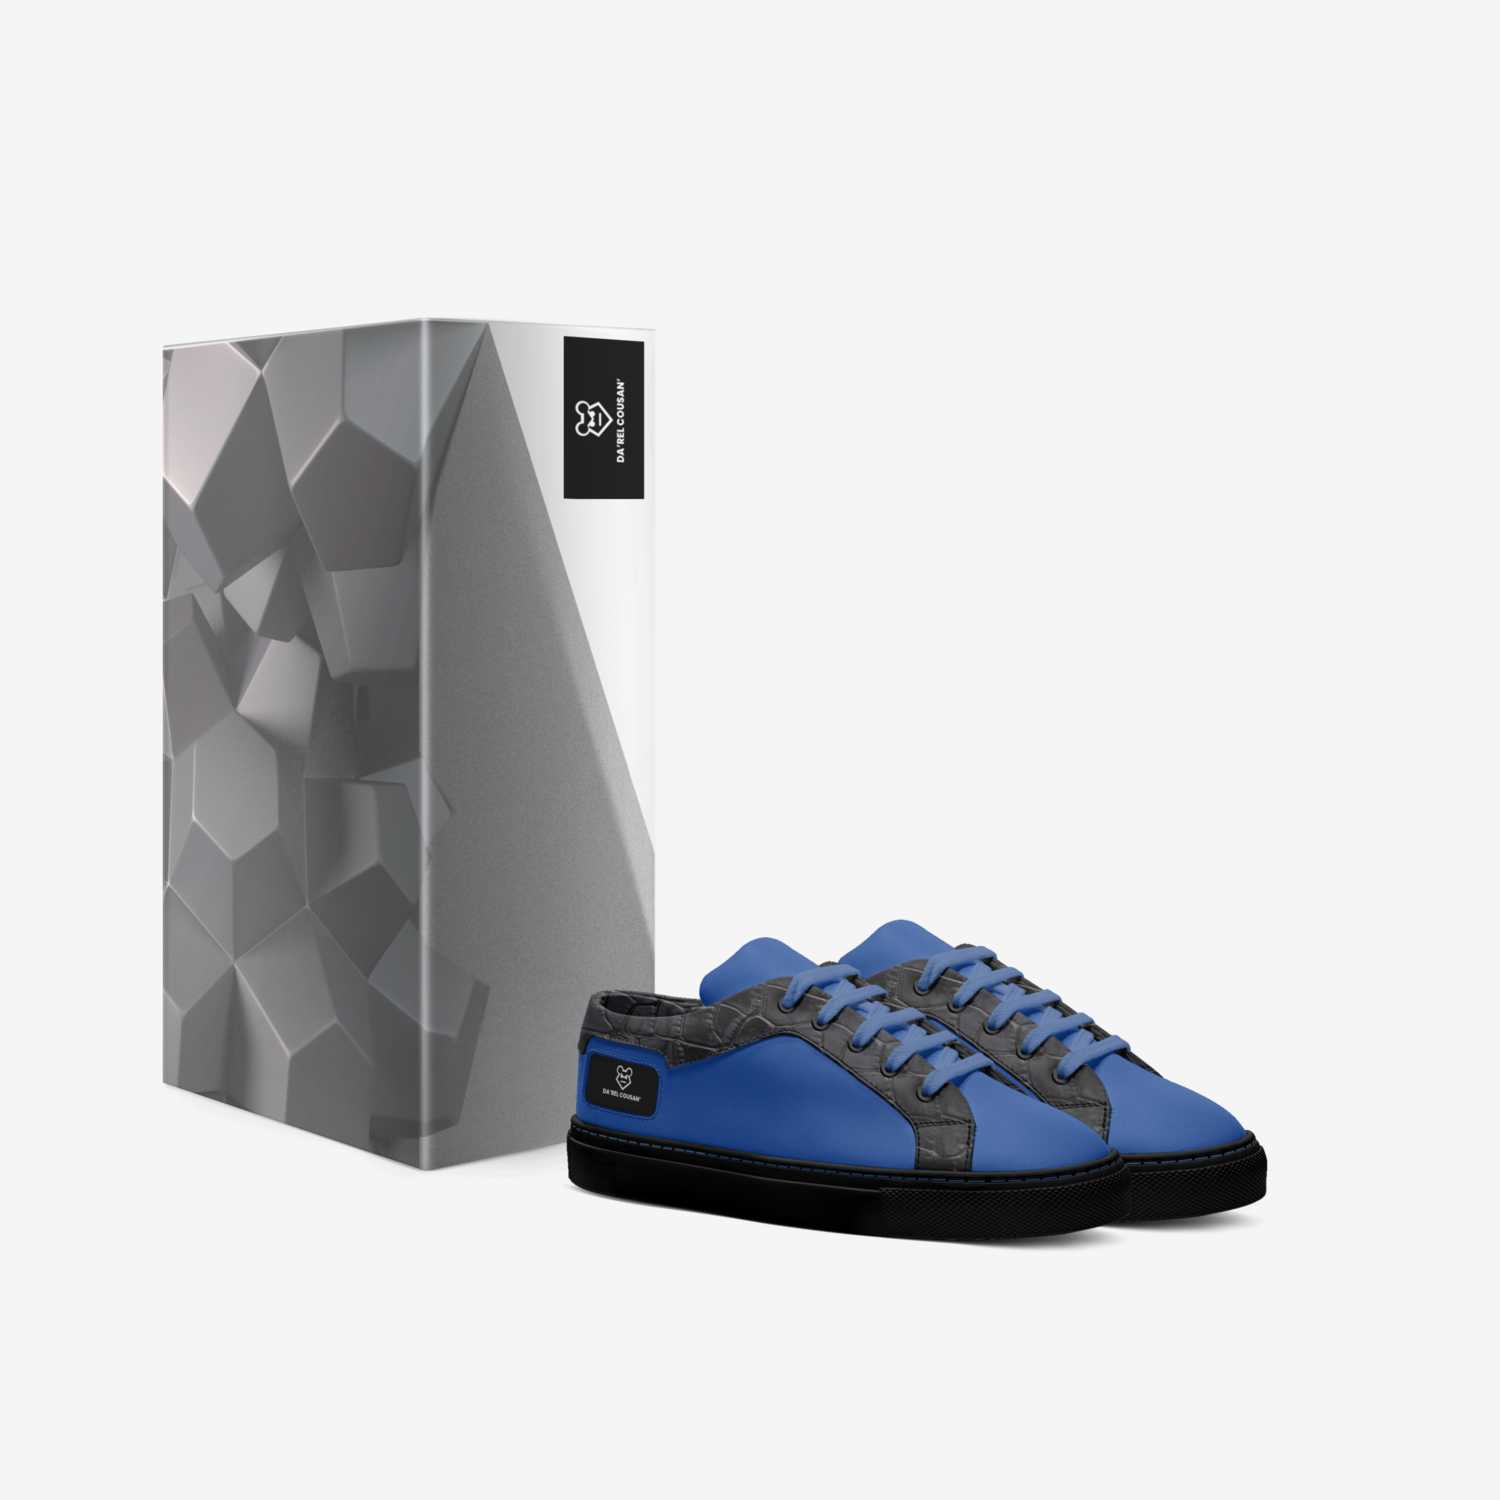 Da'rel Cousan' custom made in Italy shoes by Darel Cousan | Box view